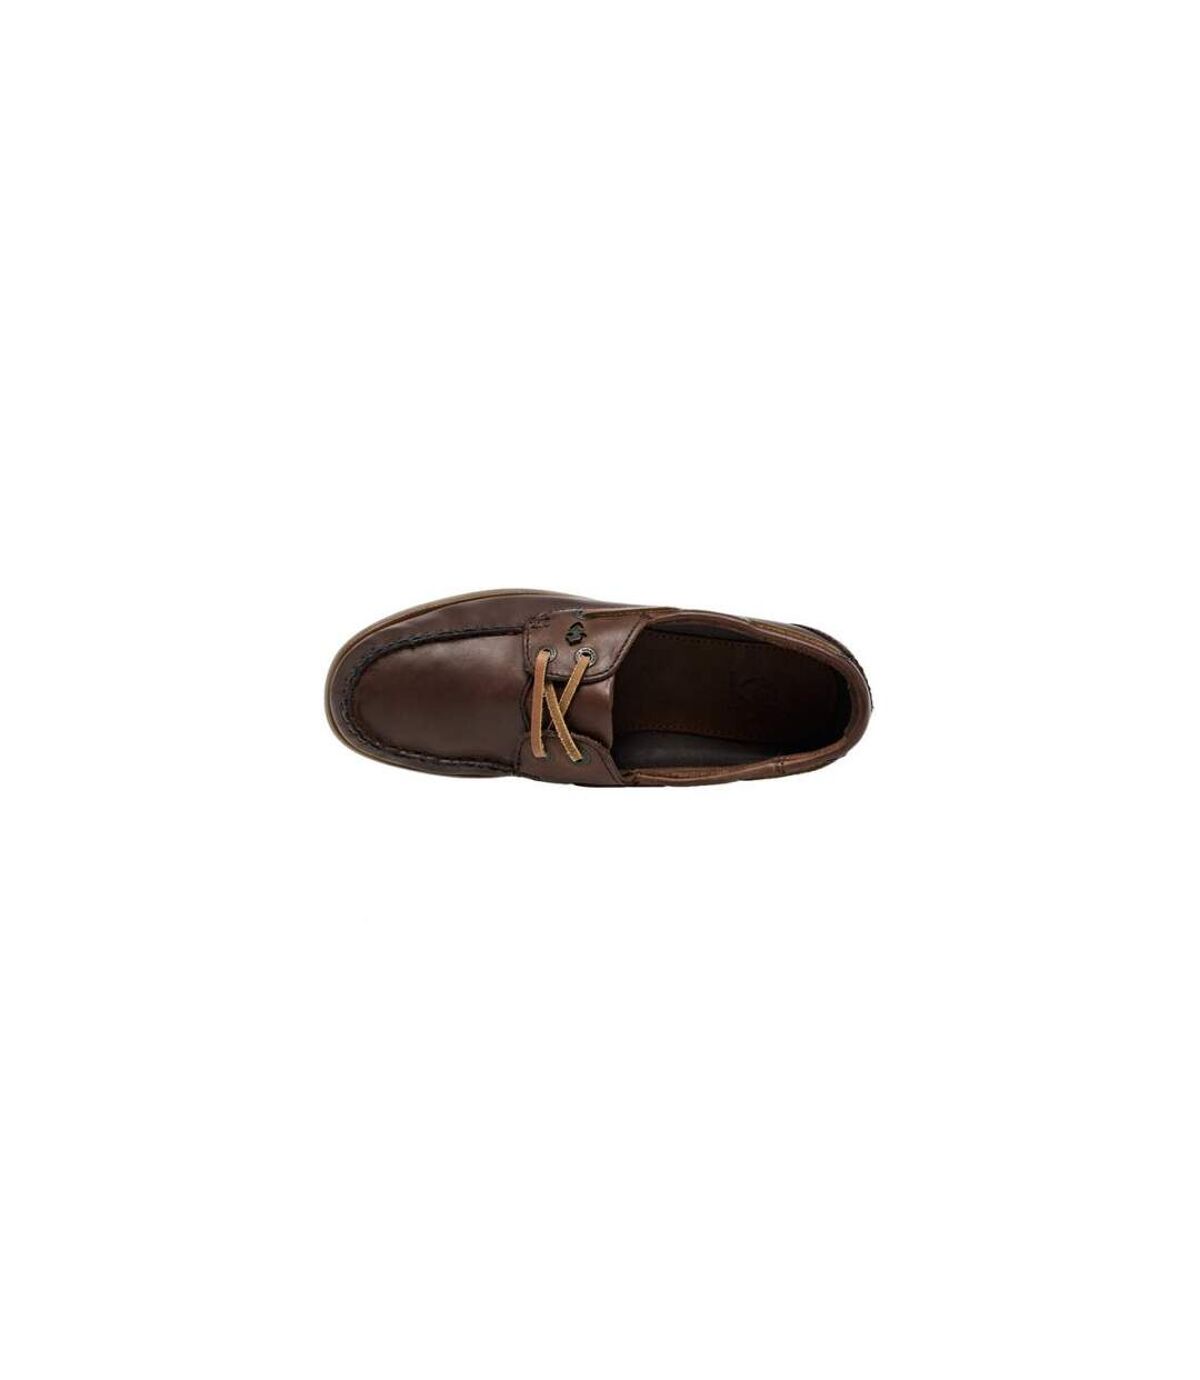 Moretta Womens/Ladies Avisa Leather Boat Shoes (Chestnut Brown) - UTER390